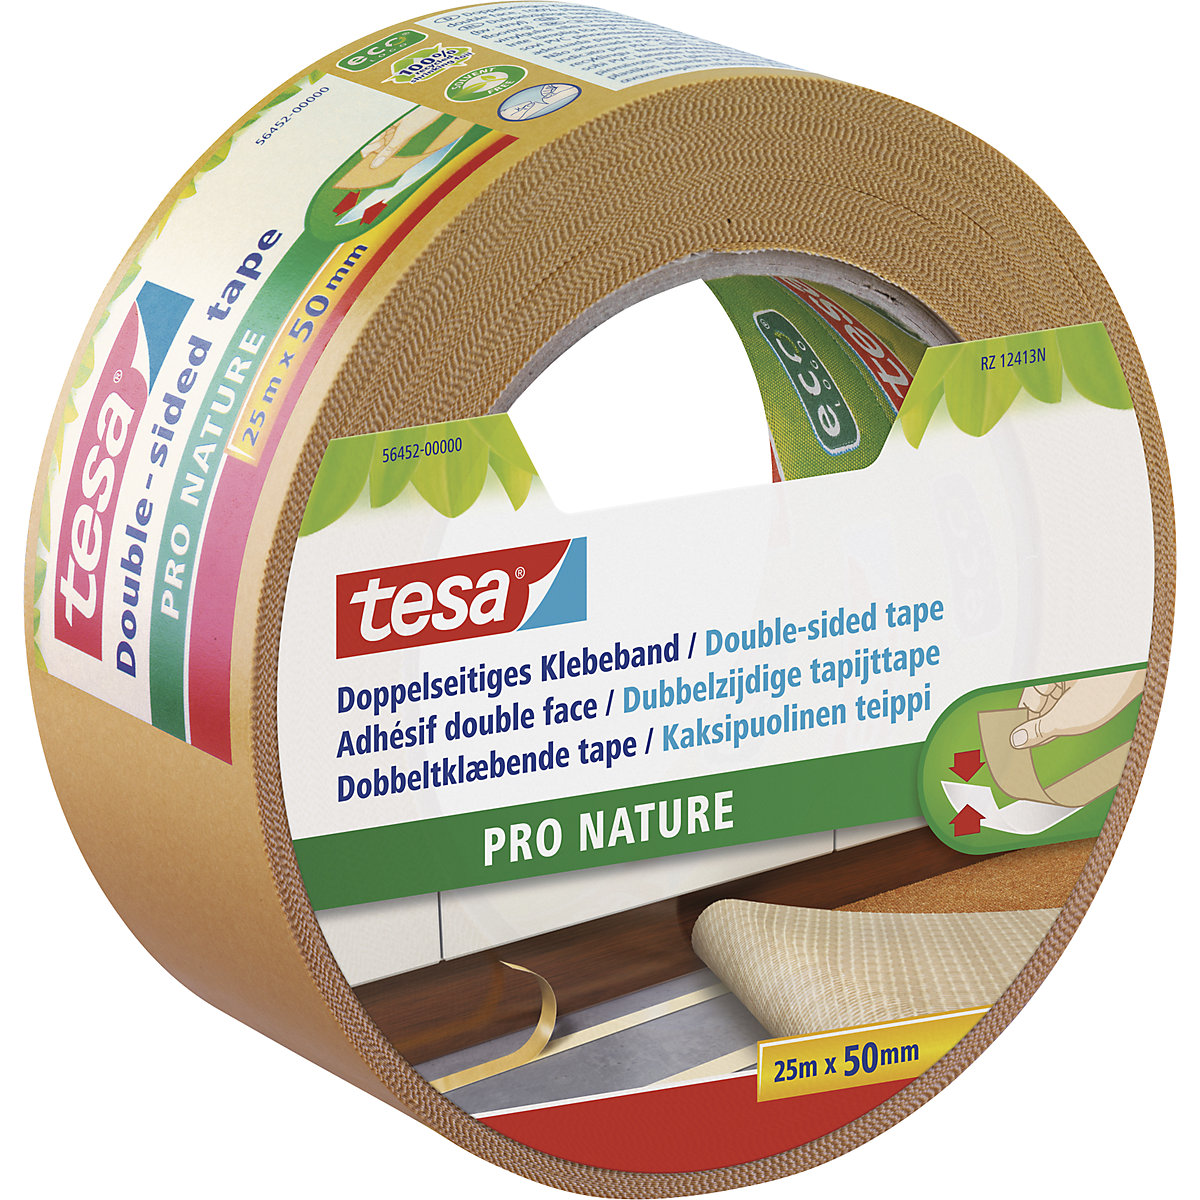 Double sided adhesive tape - tesa